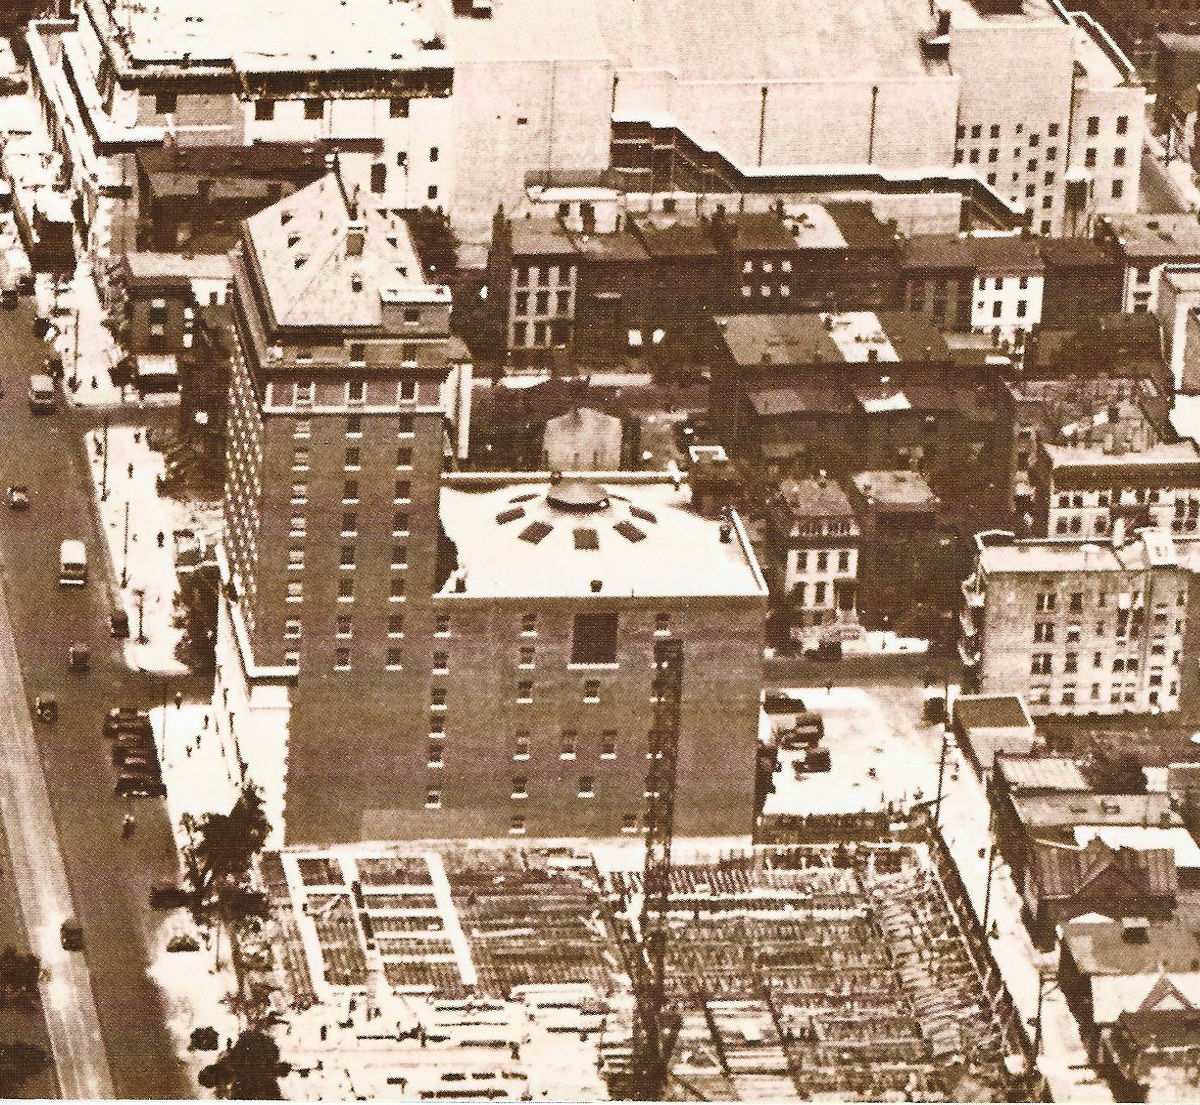 1925
Under Construction (lower)
